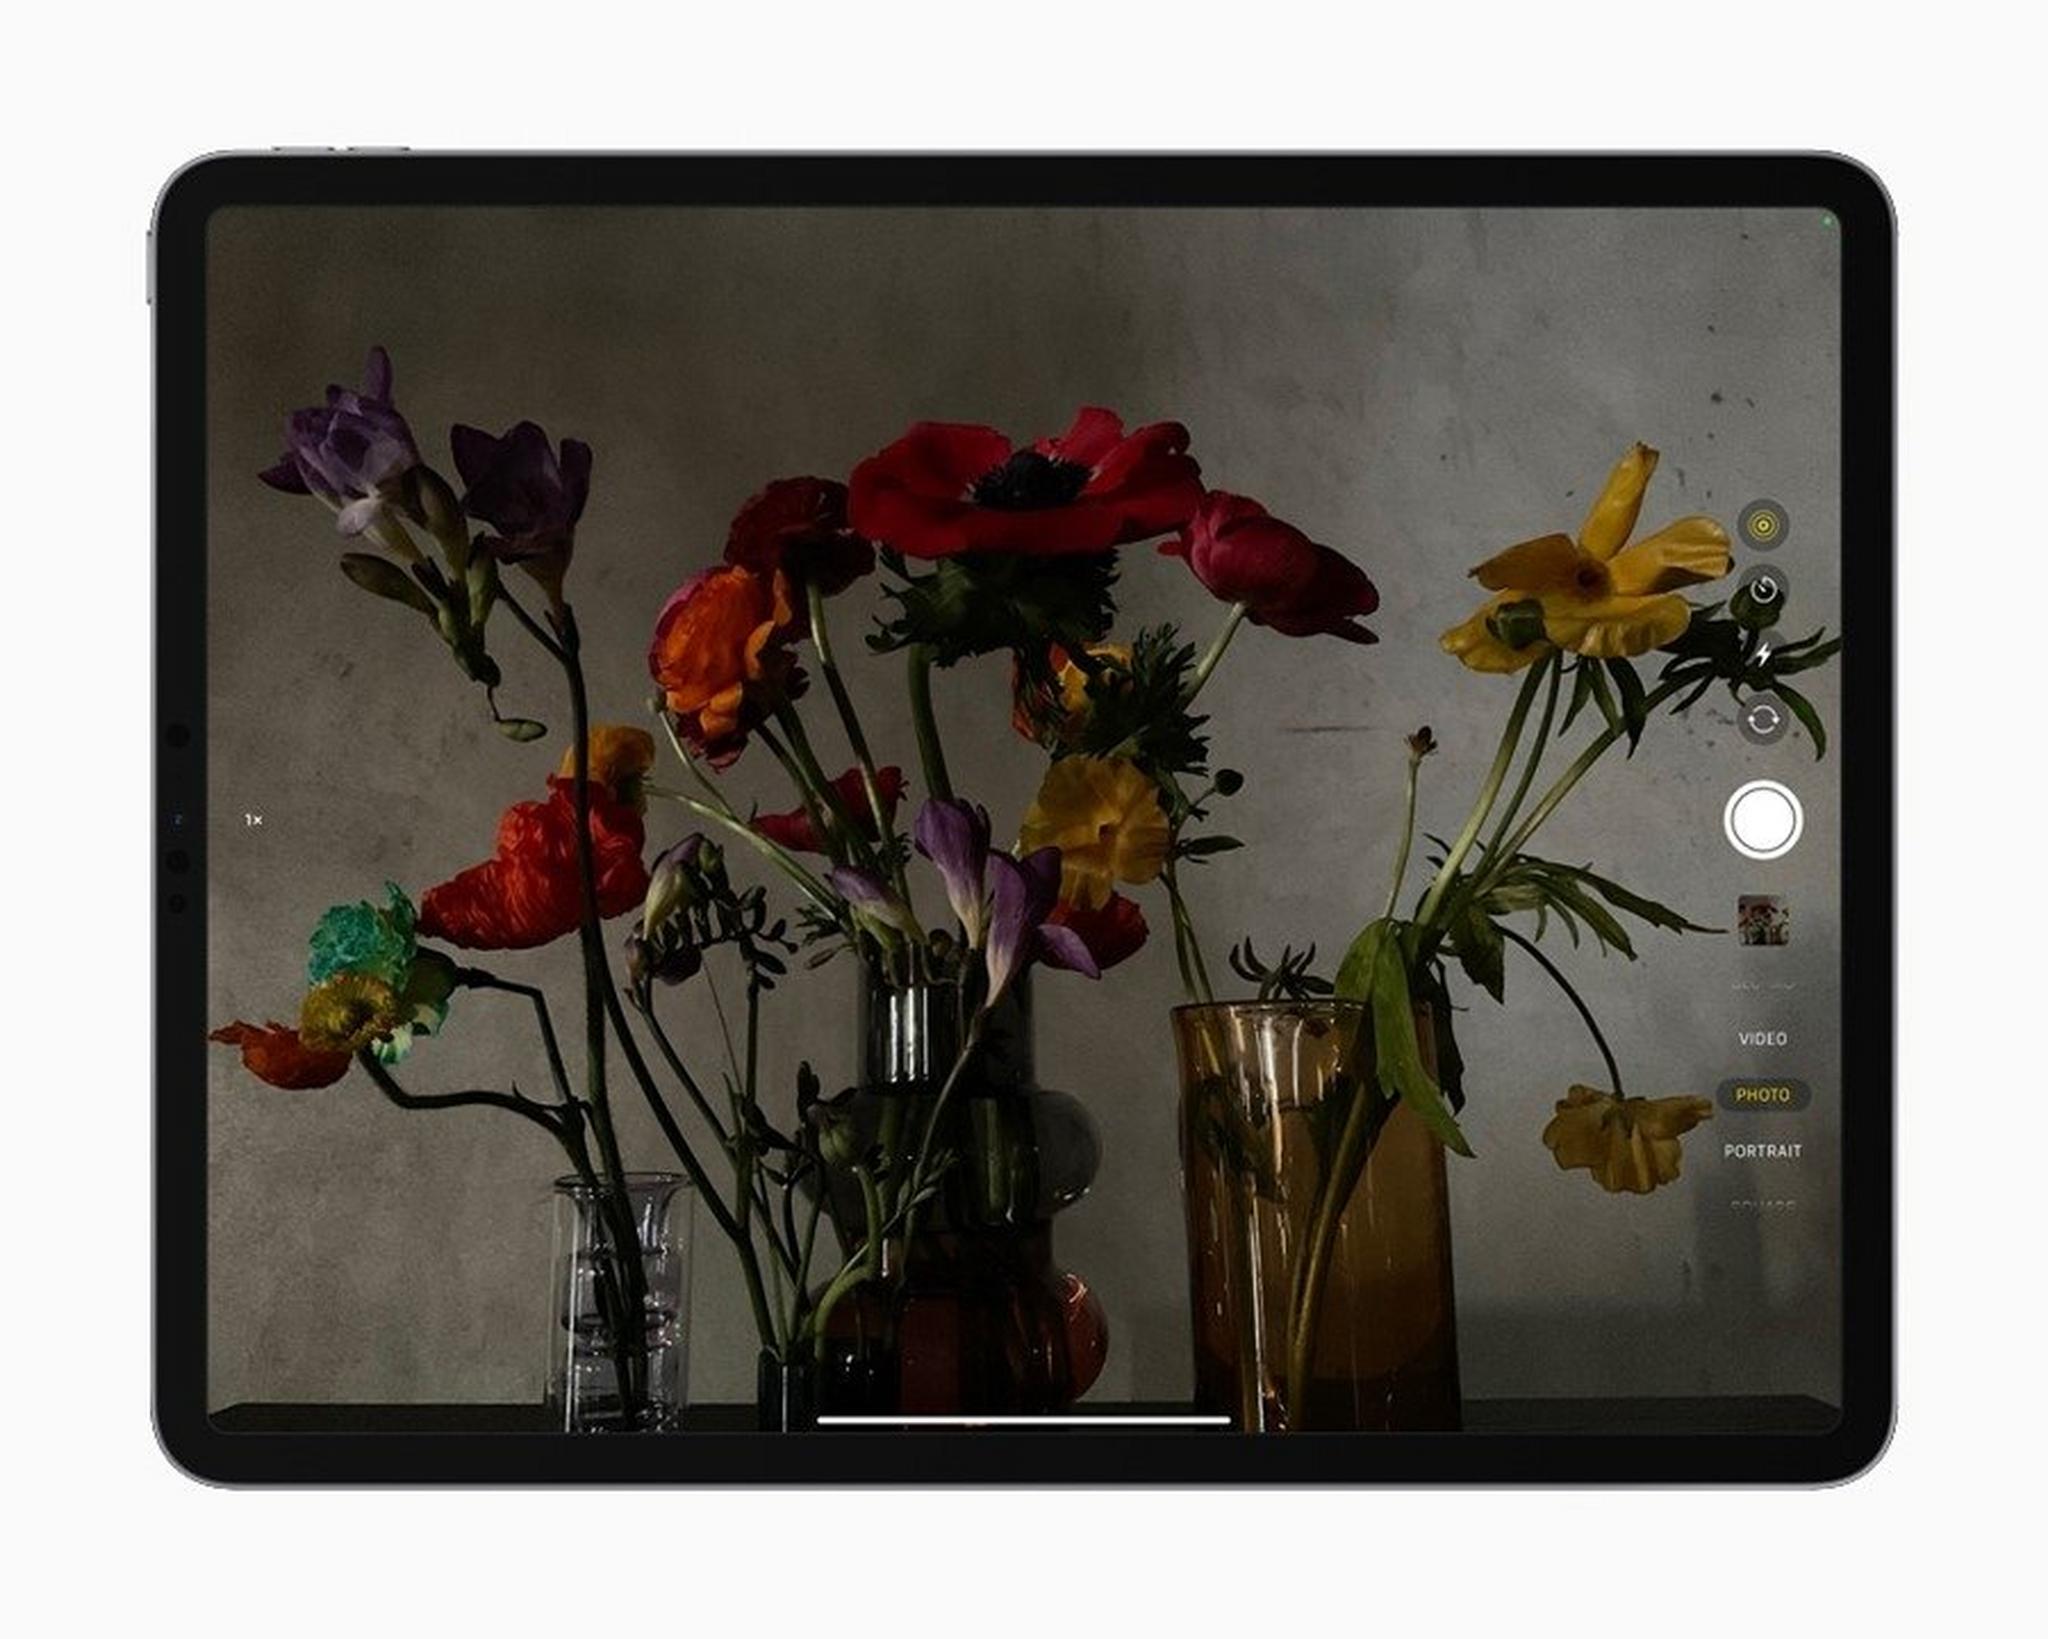 Apple iPad Pro 2021 M1 256GB Wifi 11-inch Tablet - Grey